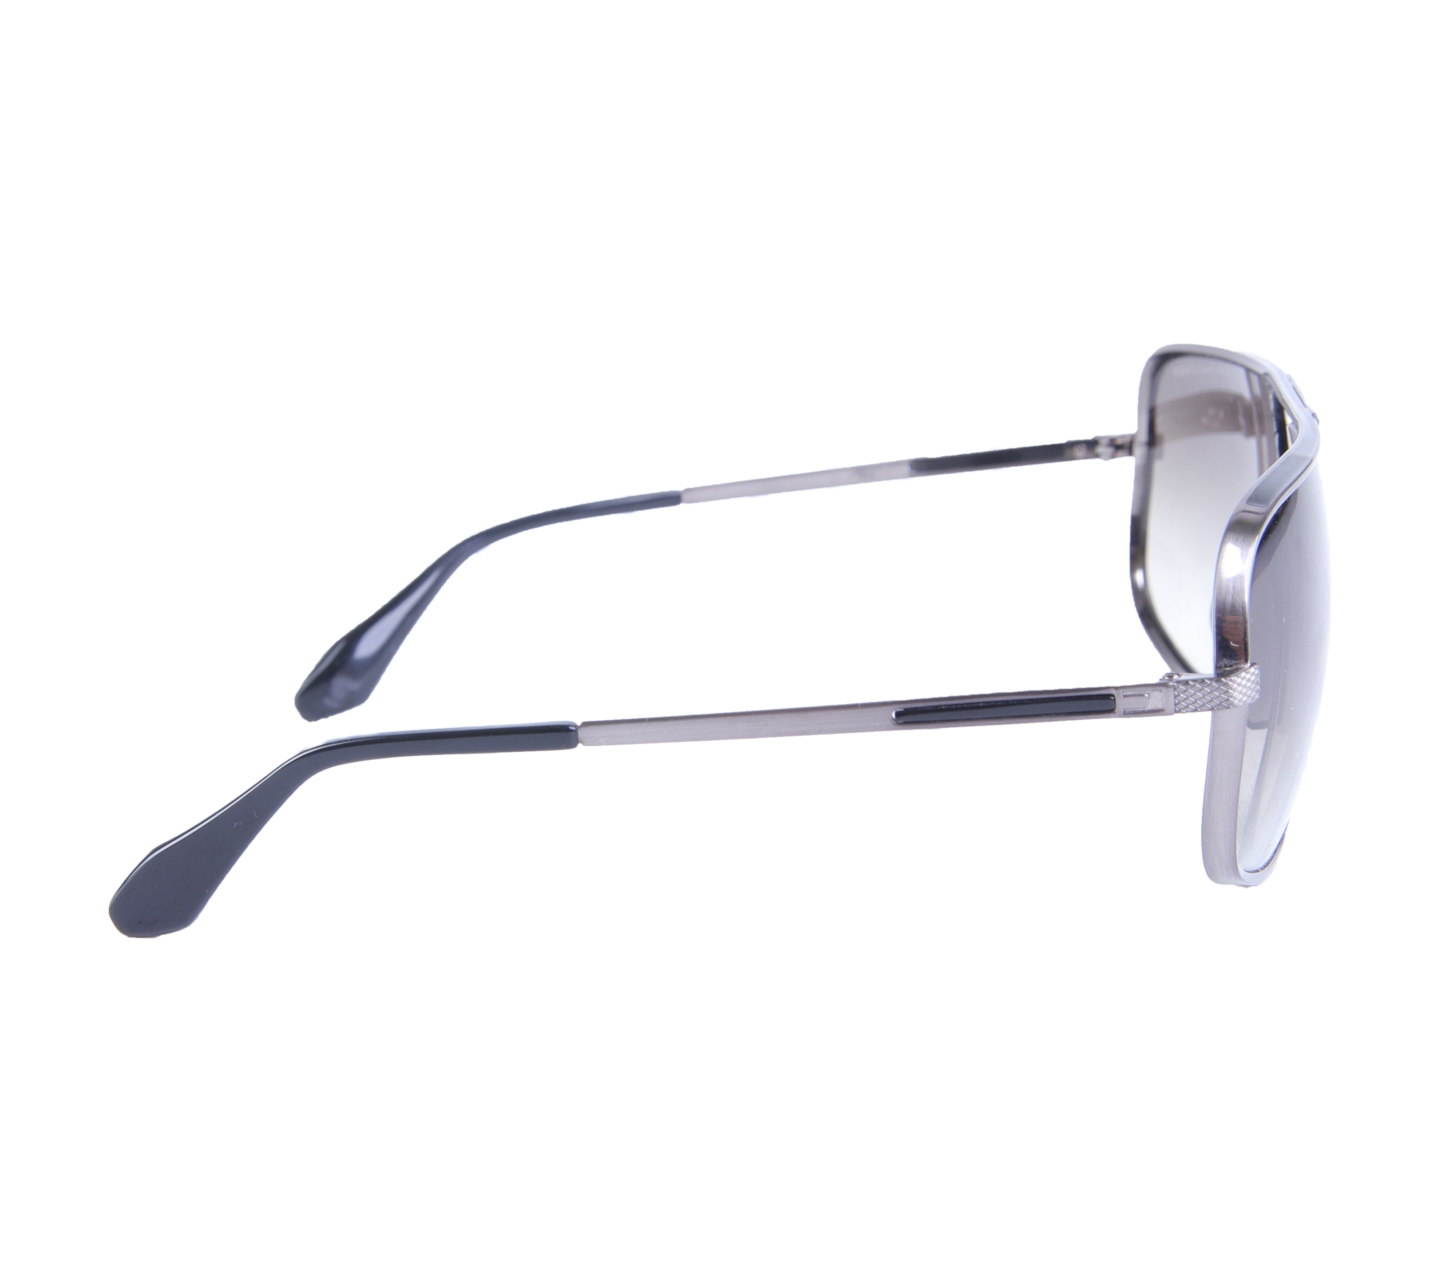 Dita Eyewear Grey Decade Two Sunglasses